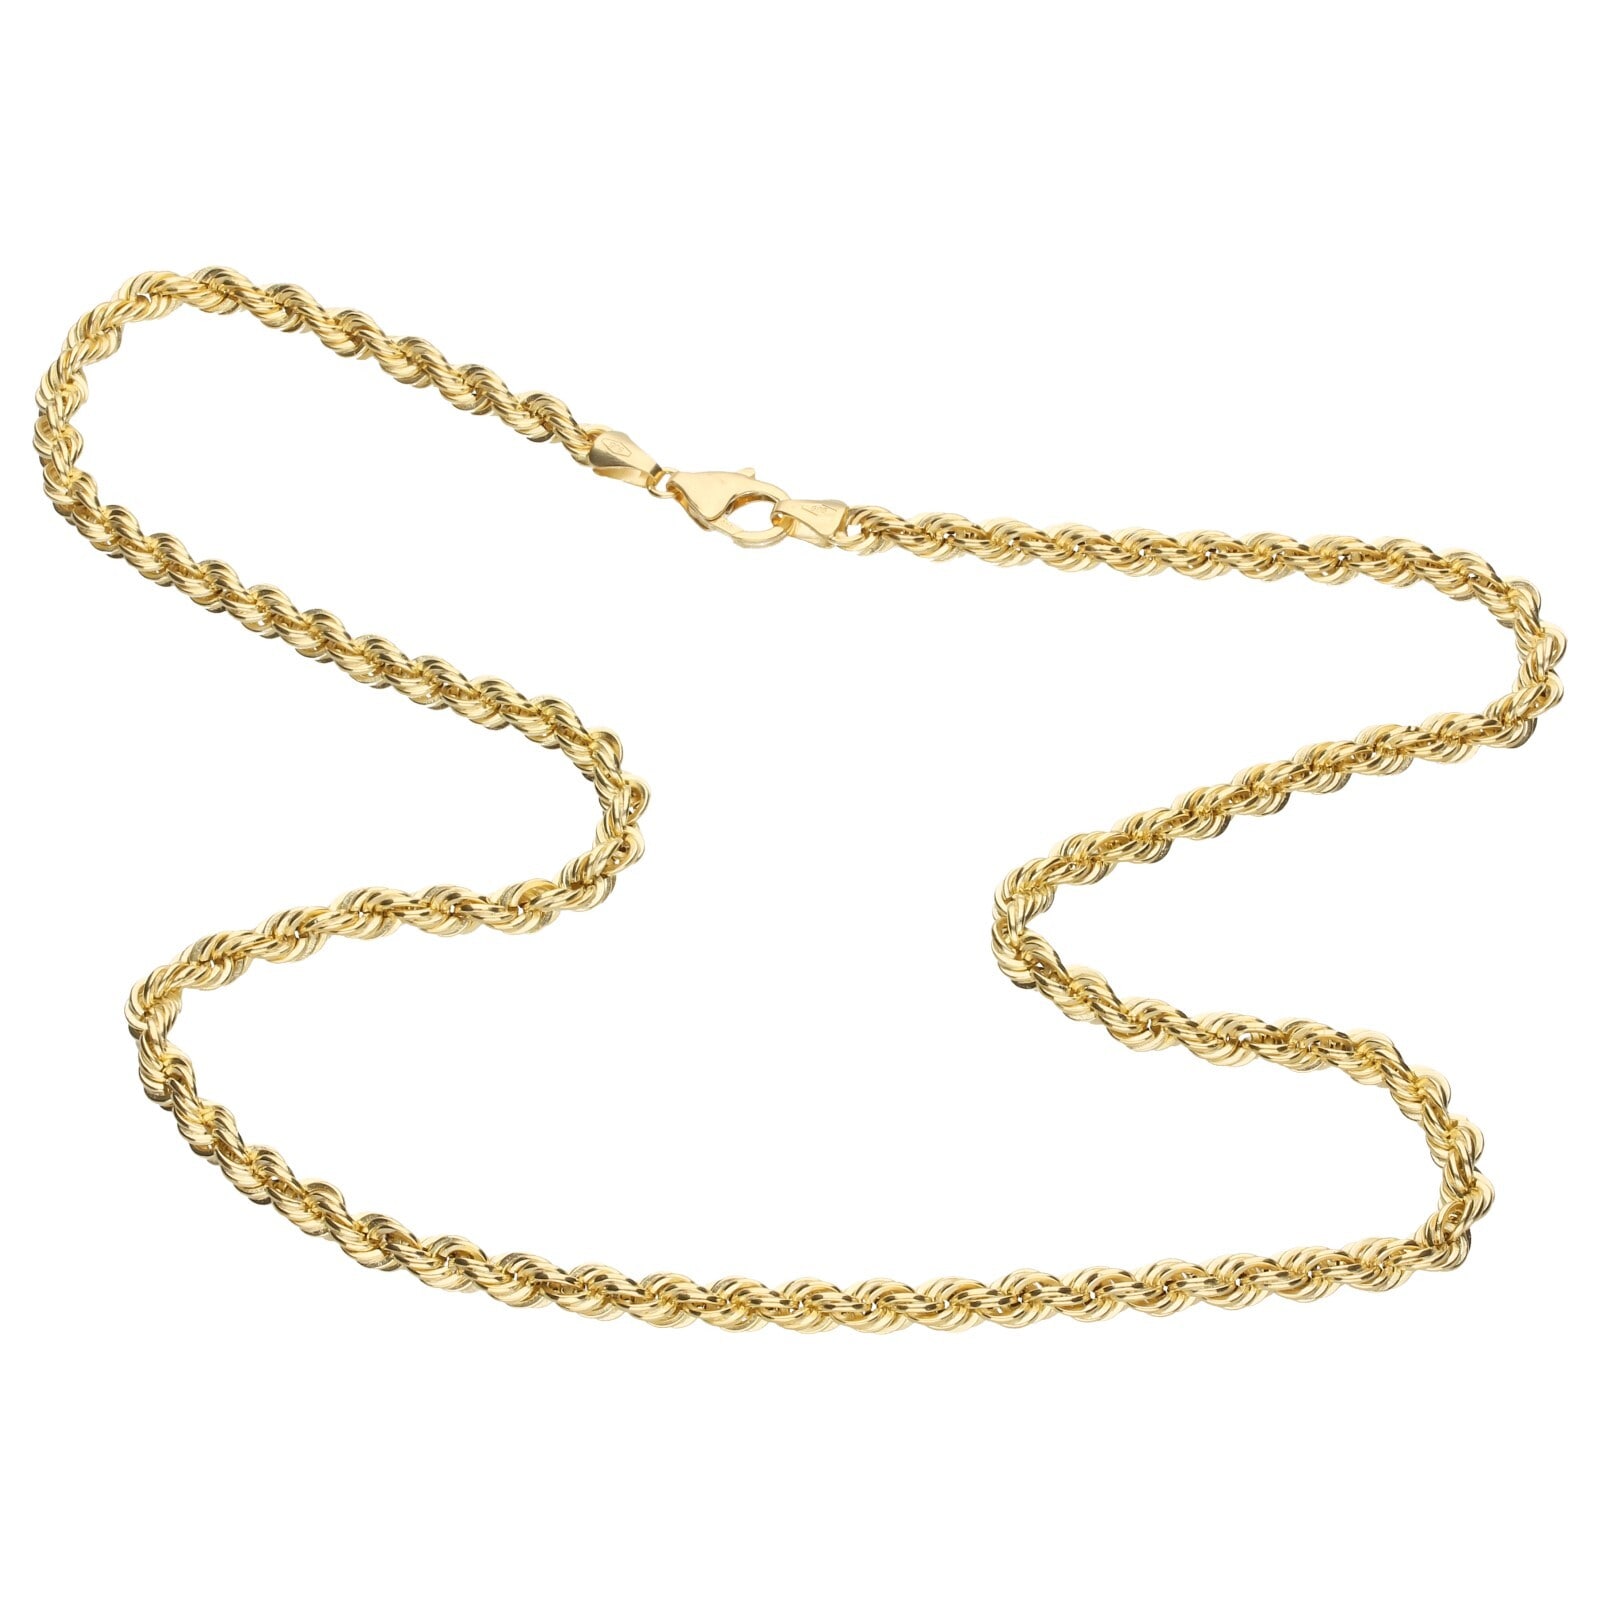 Gold bestellen »Kordelkette, Merano Luigi online | Goldkette BAUR hohl, 585«